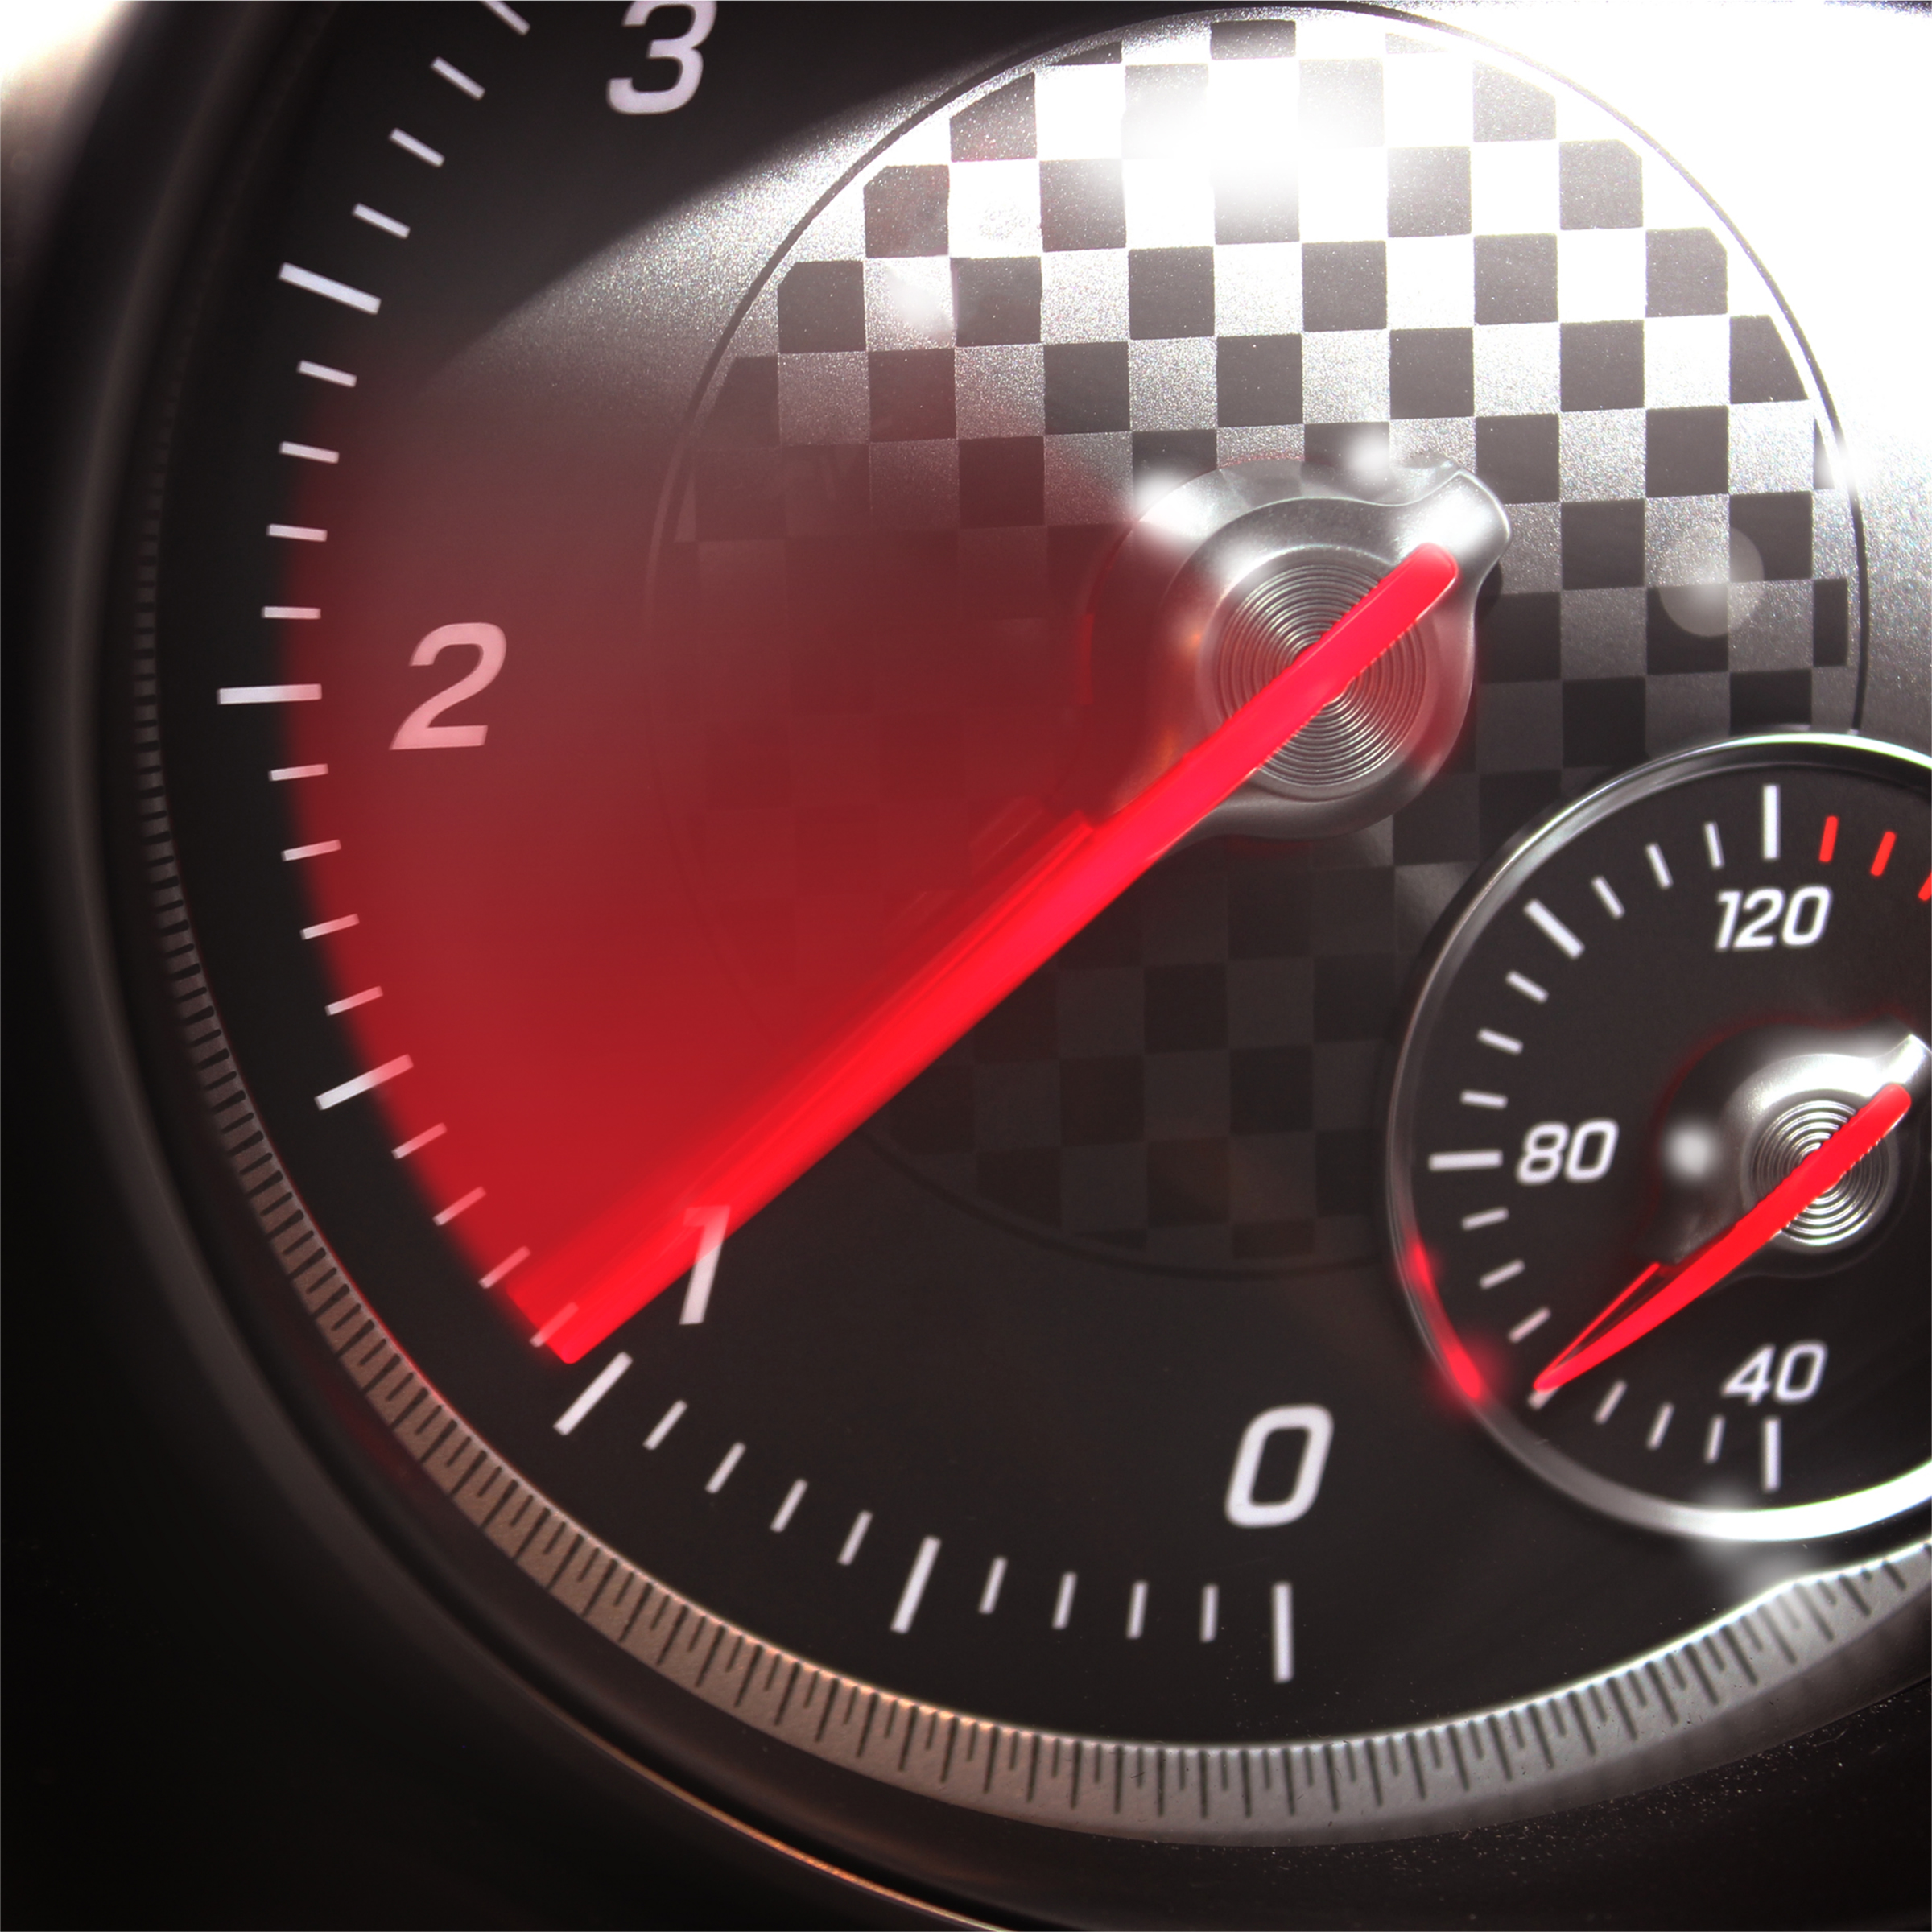 Sports Car RPM Gauge - Tachometer Speeding Up, Abstract, Power, Instrument, Interior, HQ Photo